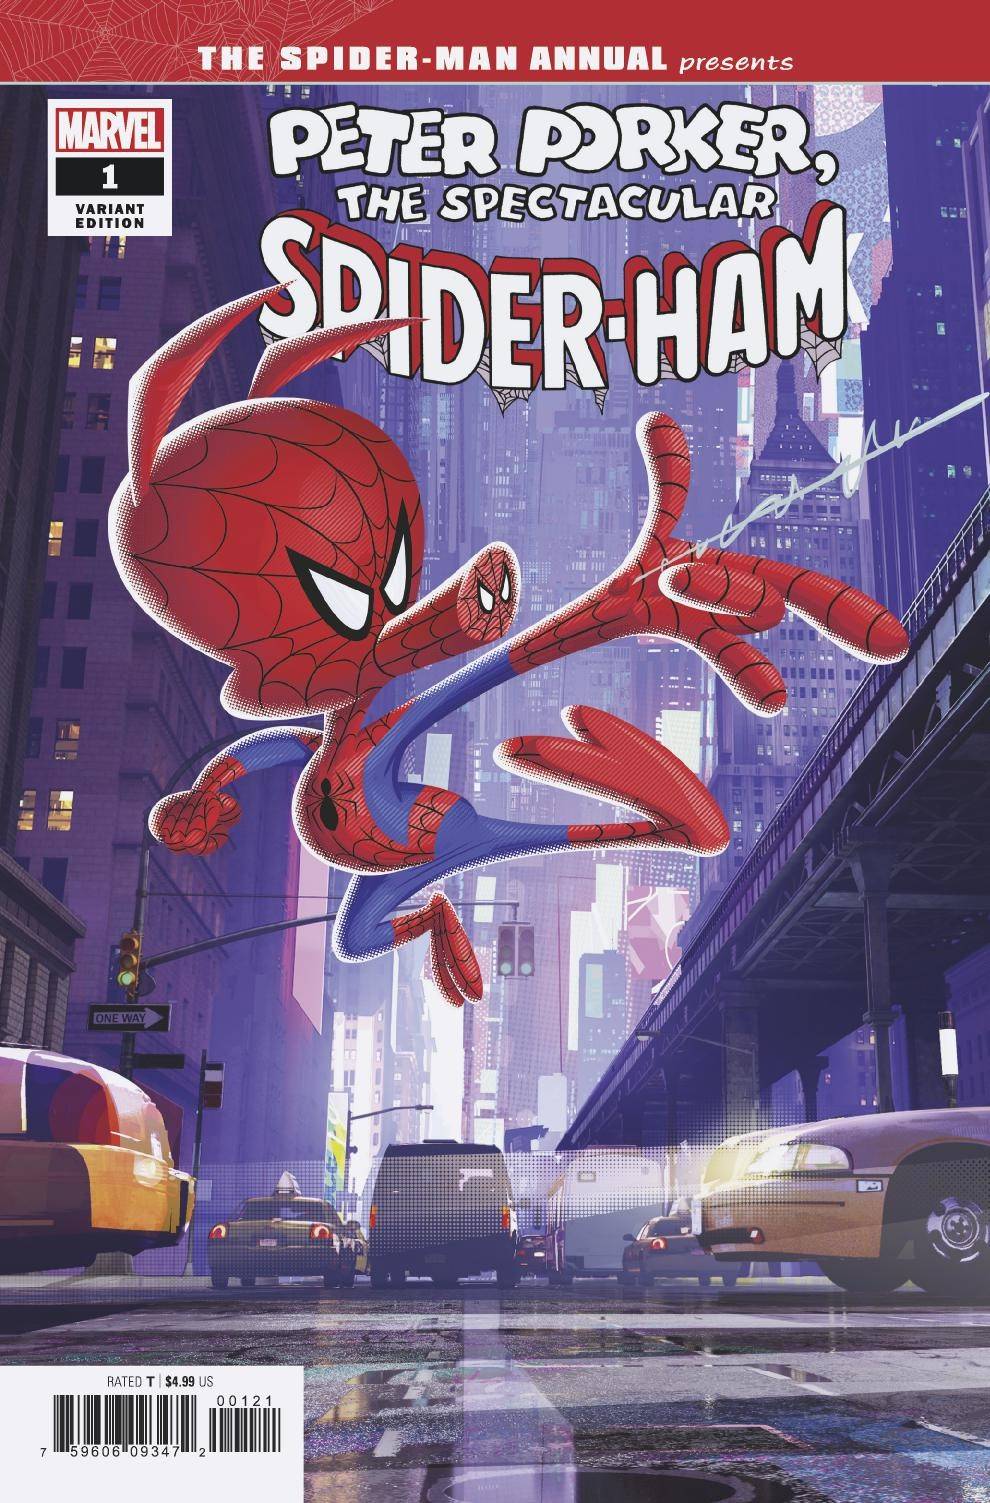 Spider-Man Annual #1 Animation Variant